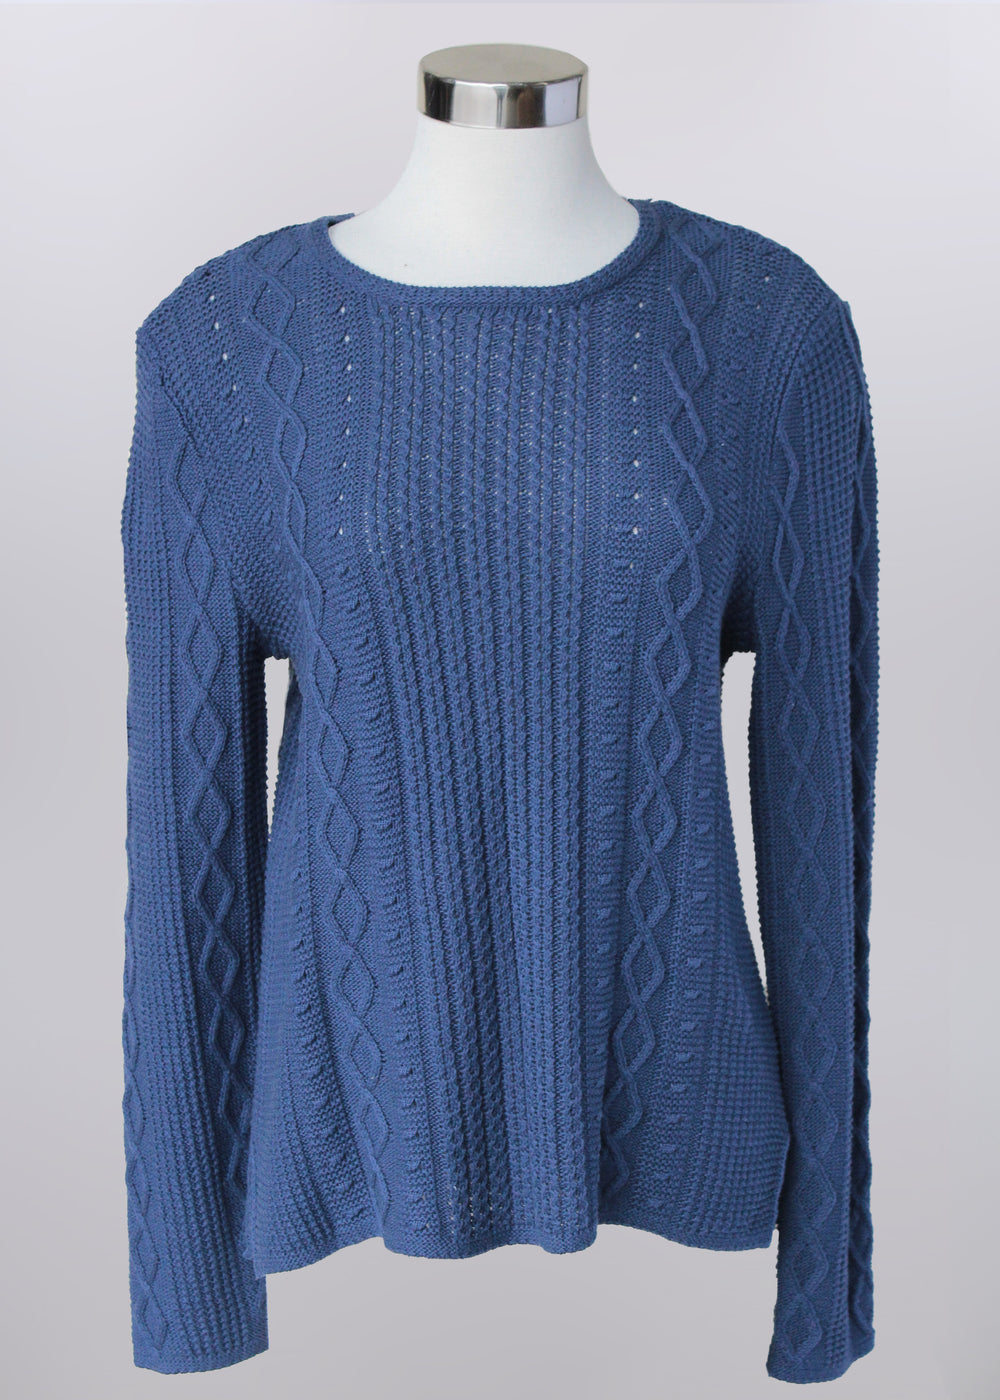 Keren Hart sweater 33042, cable knit crew